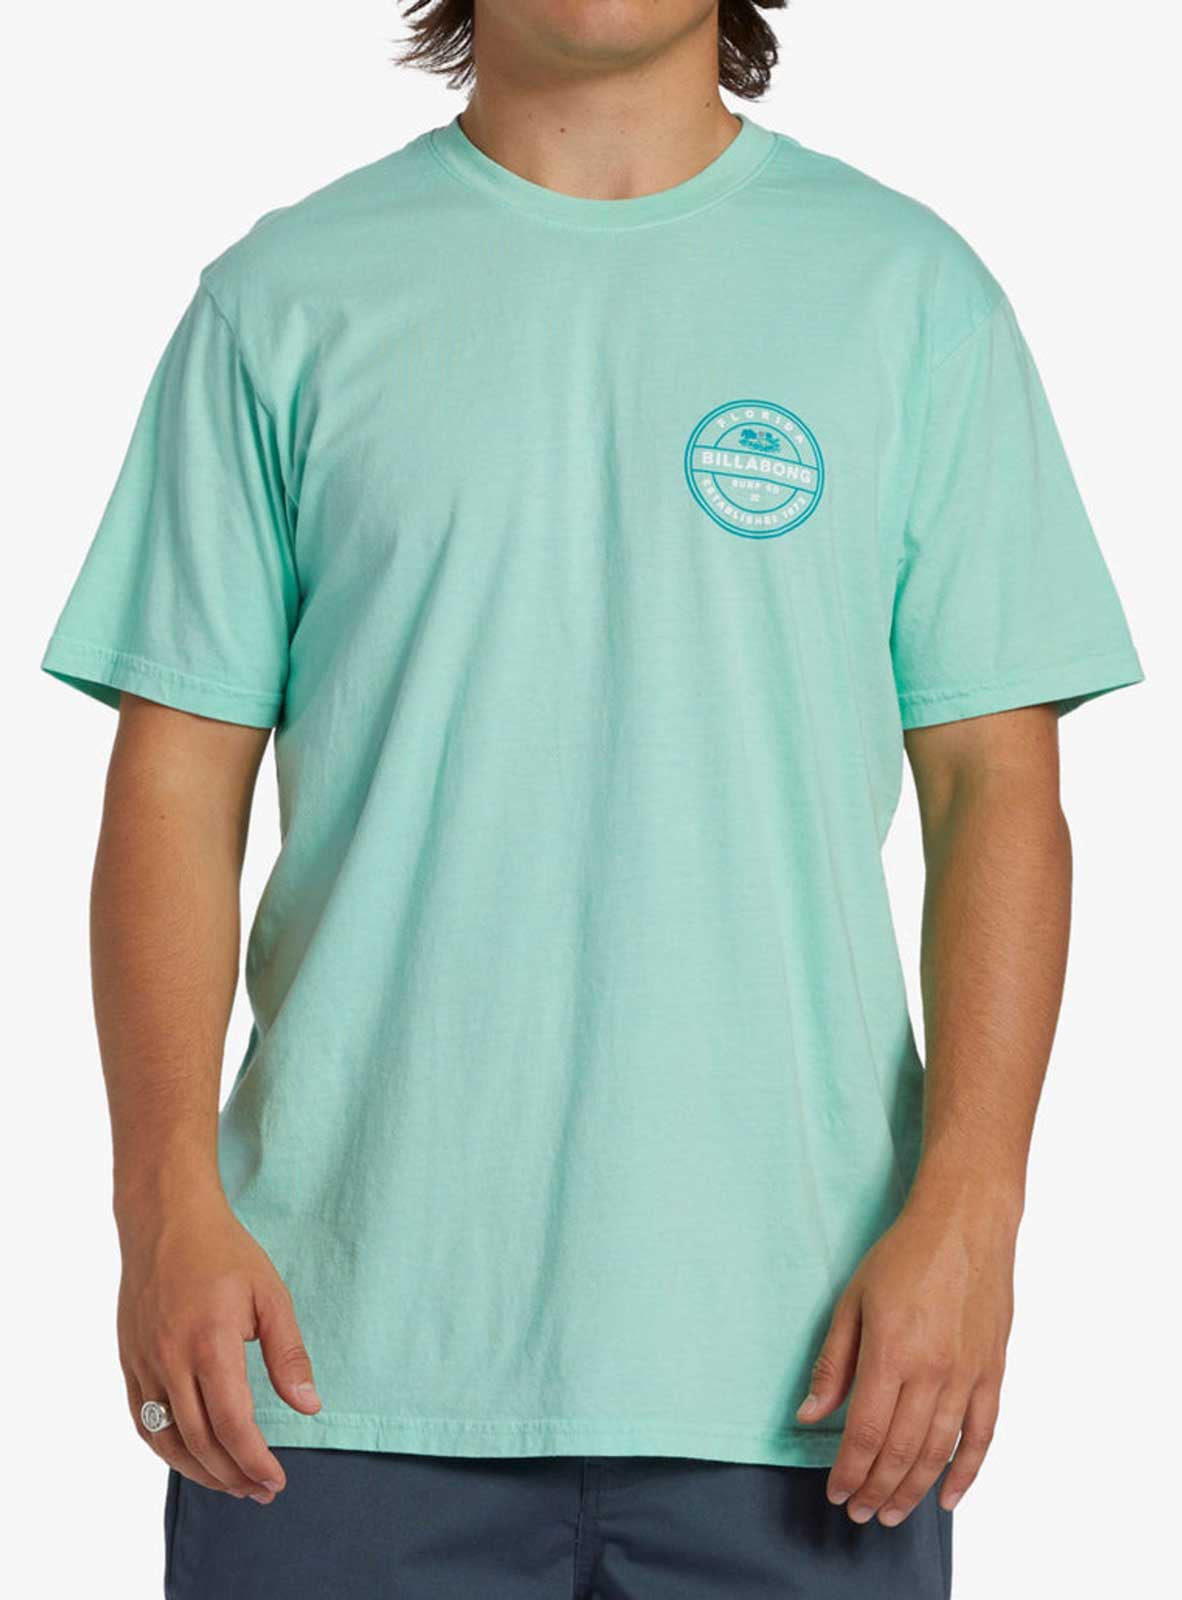 Billabong: Gator Rotor Florida Short Sleeve T-Shirt